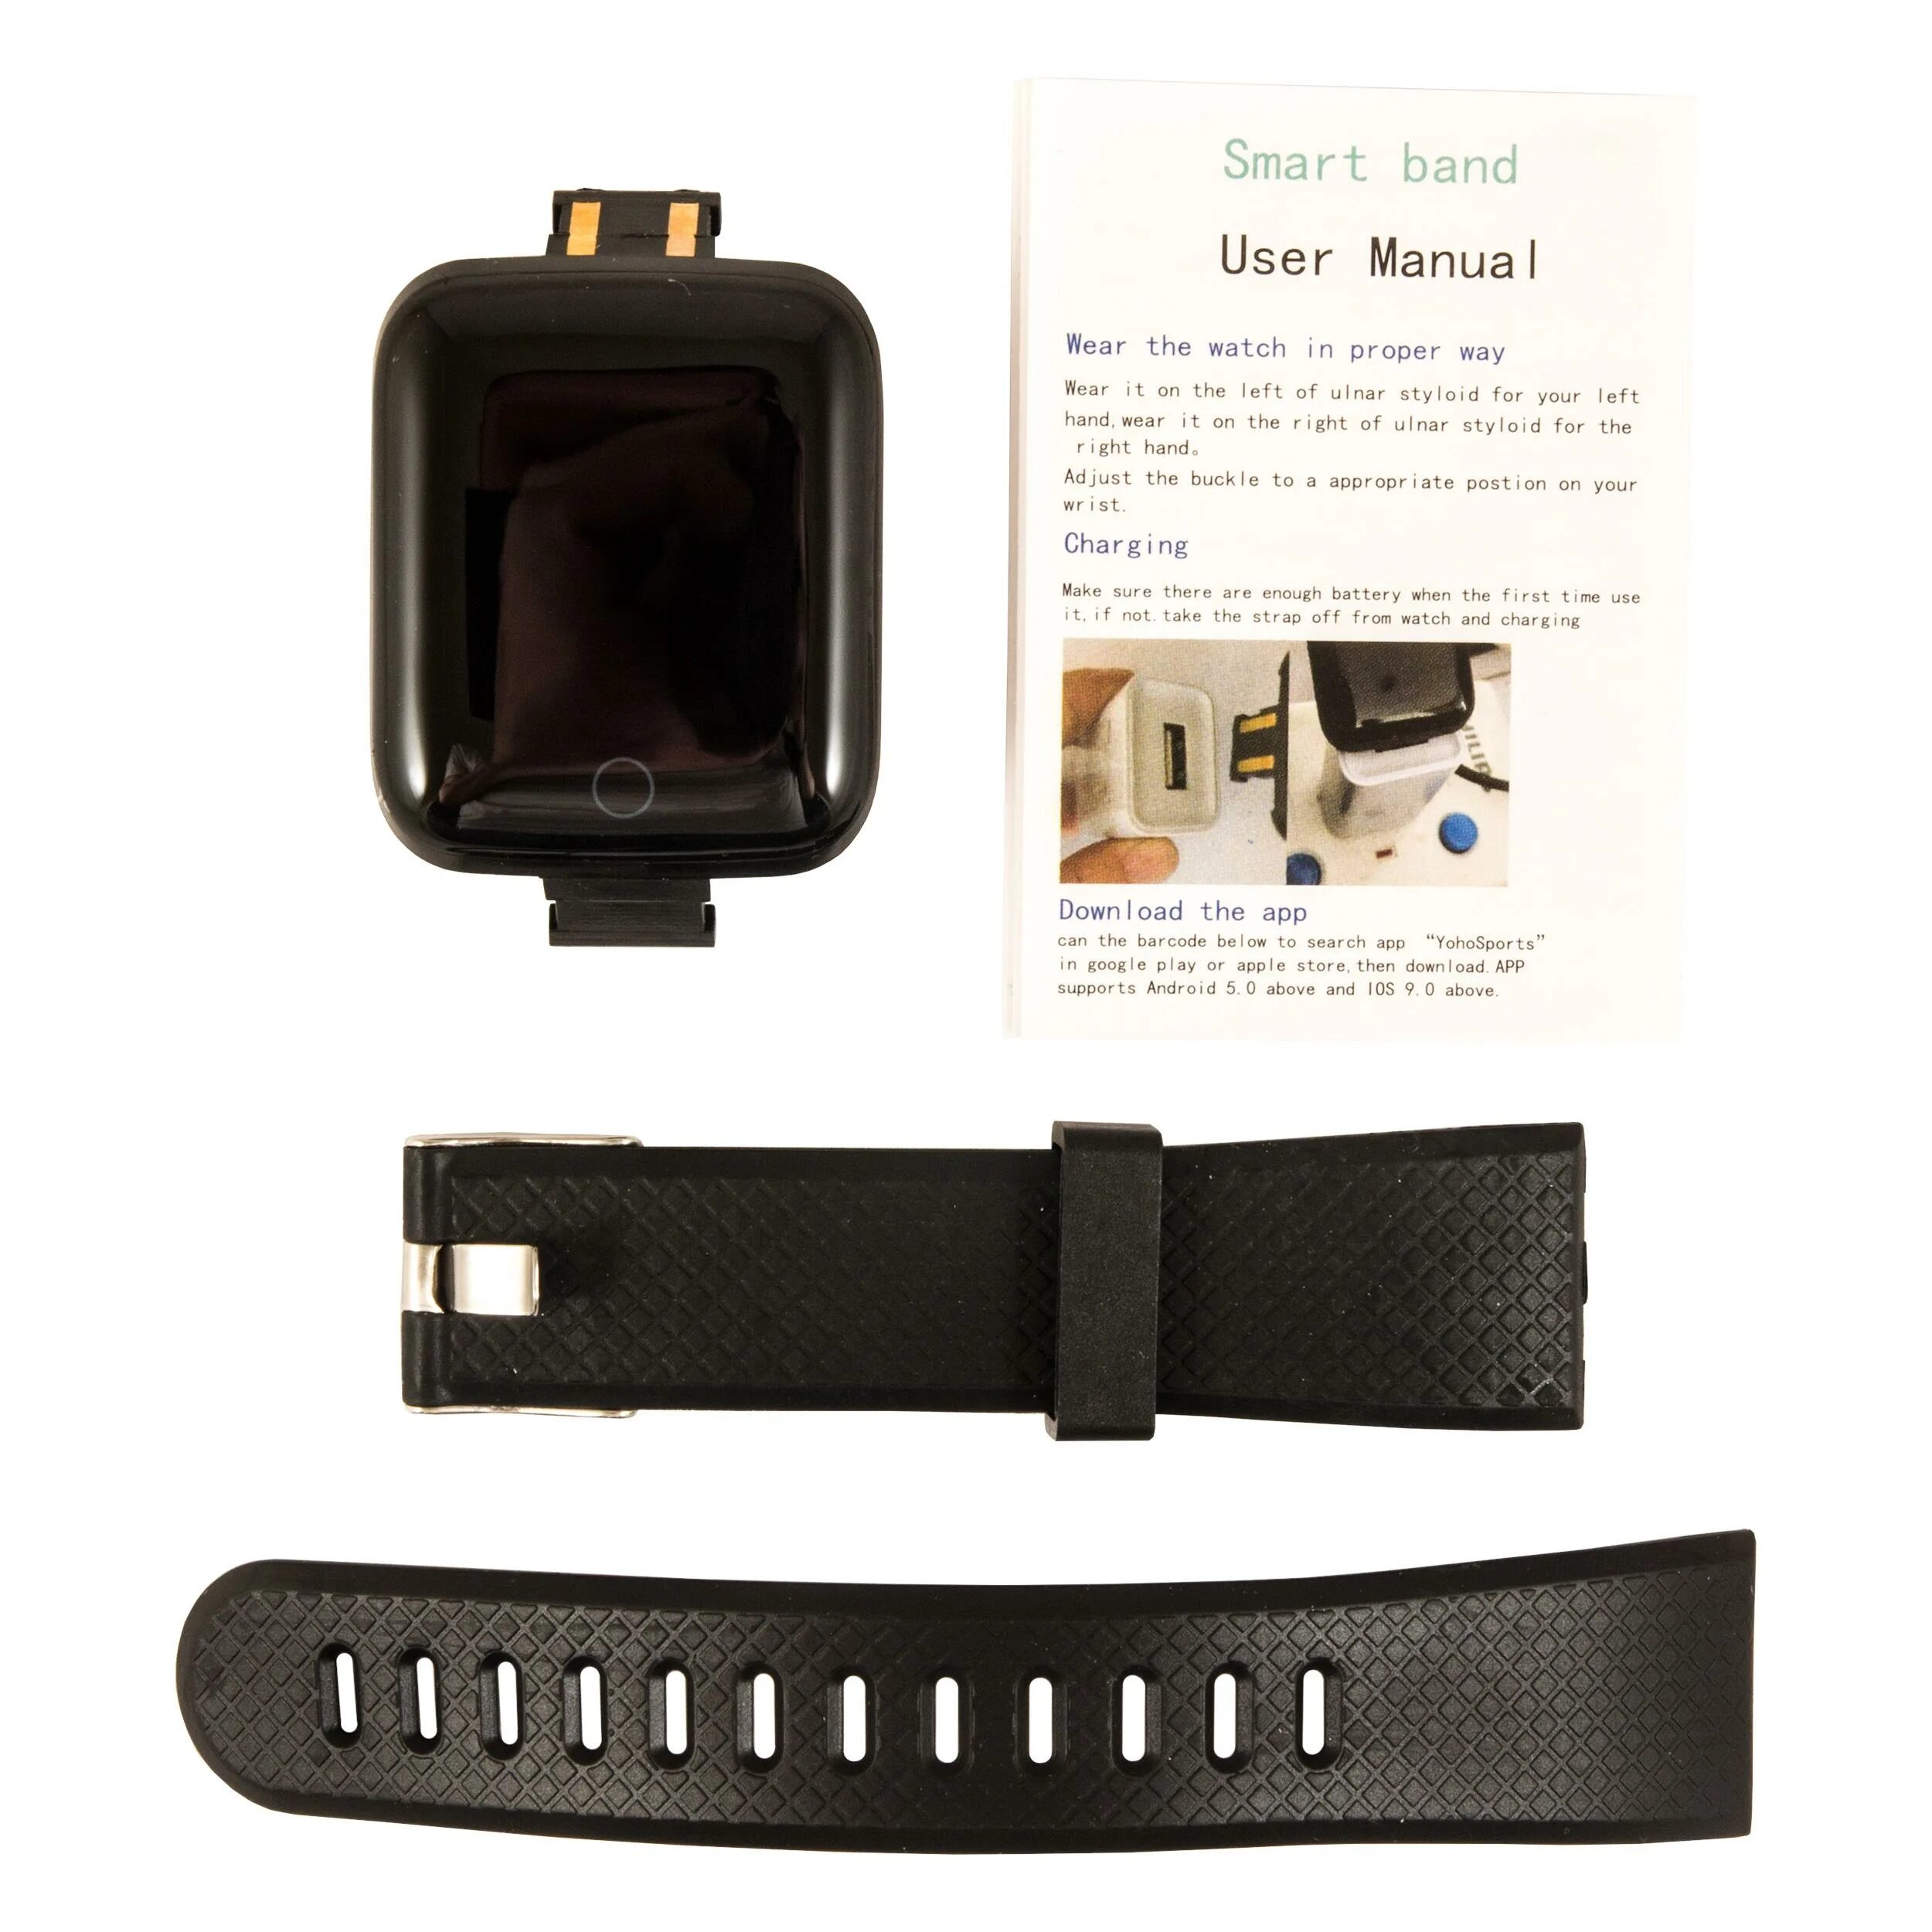 Smart Wristband user's manual браслет. Браслет смарт Wristband user s manual. Браслет часы XPX Pass. Часы user manual Smart Bracelet m40 Pro. Wristbands users